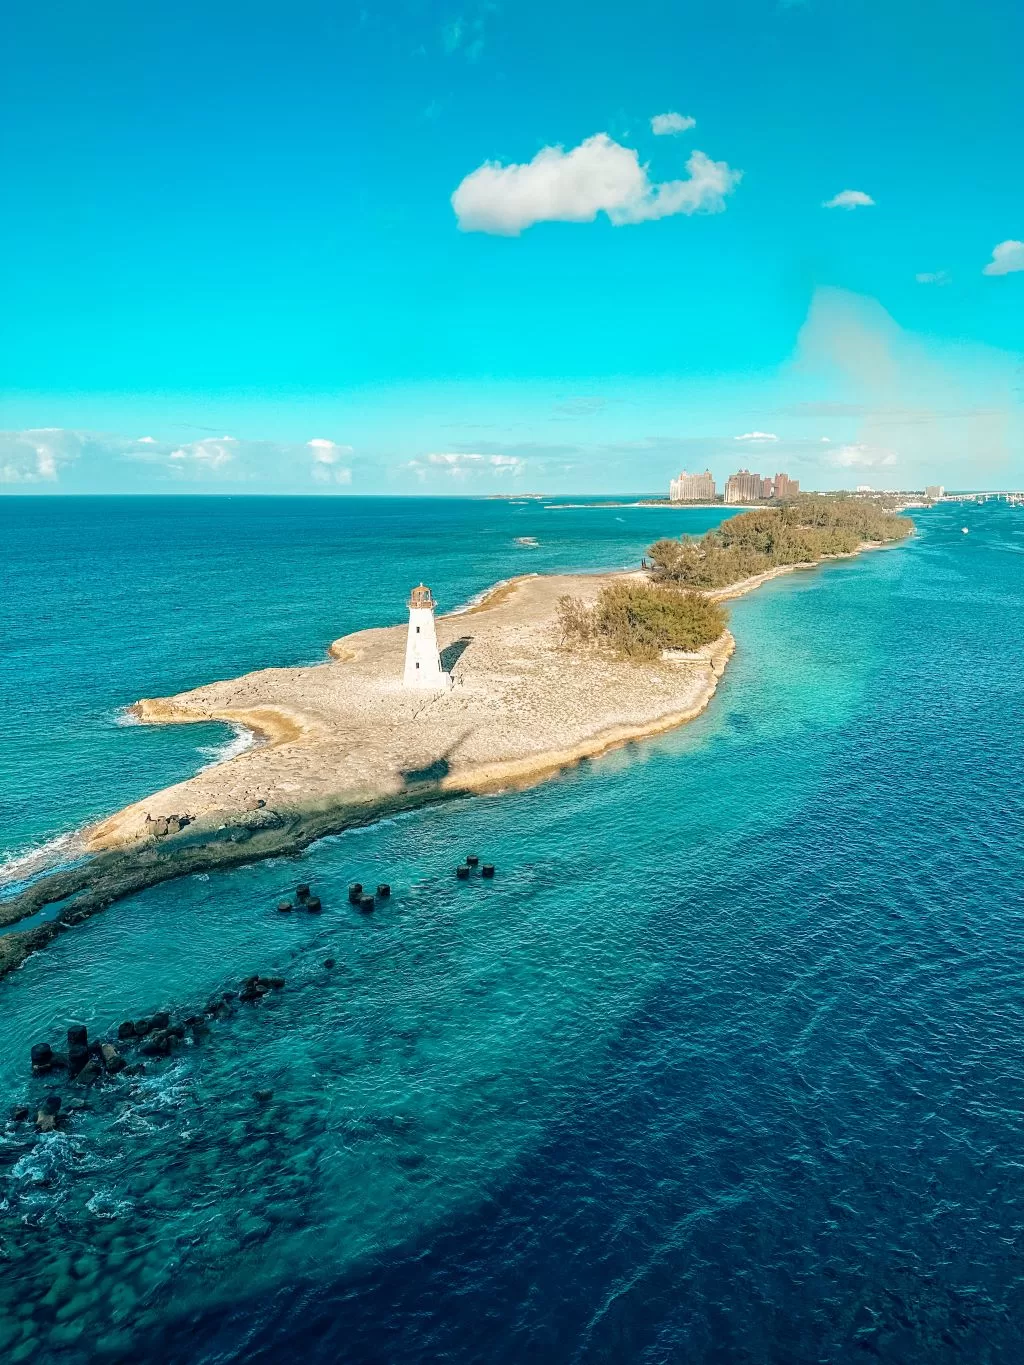 Nassau Lighthouse